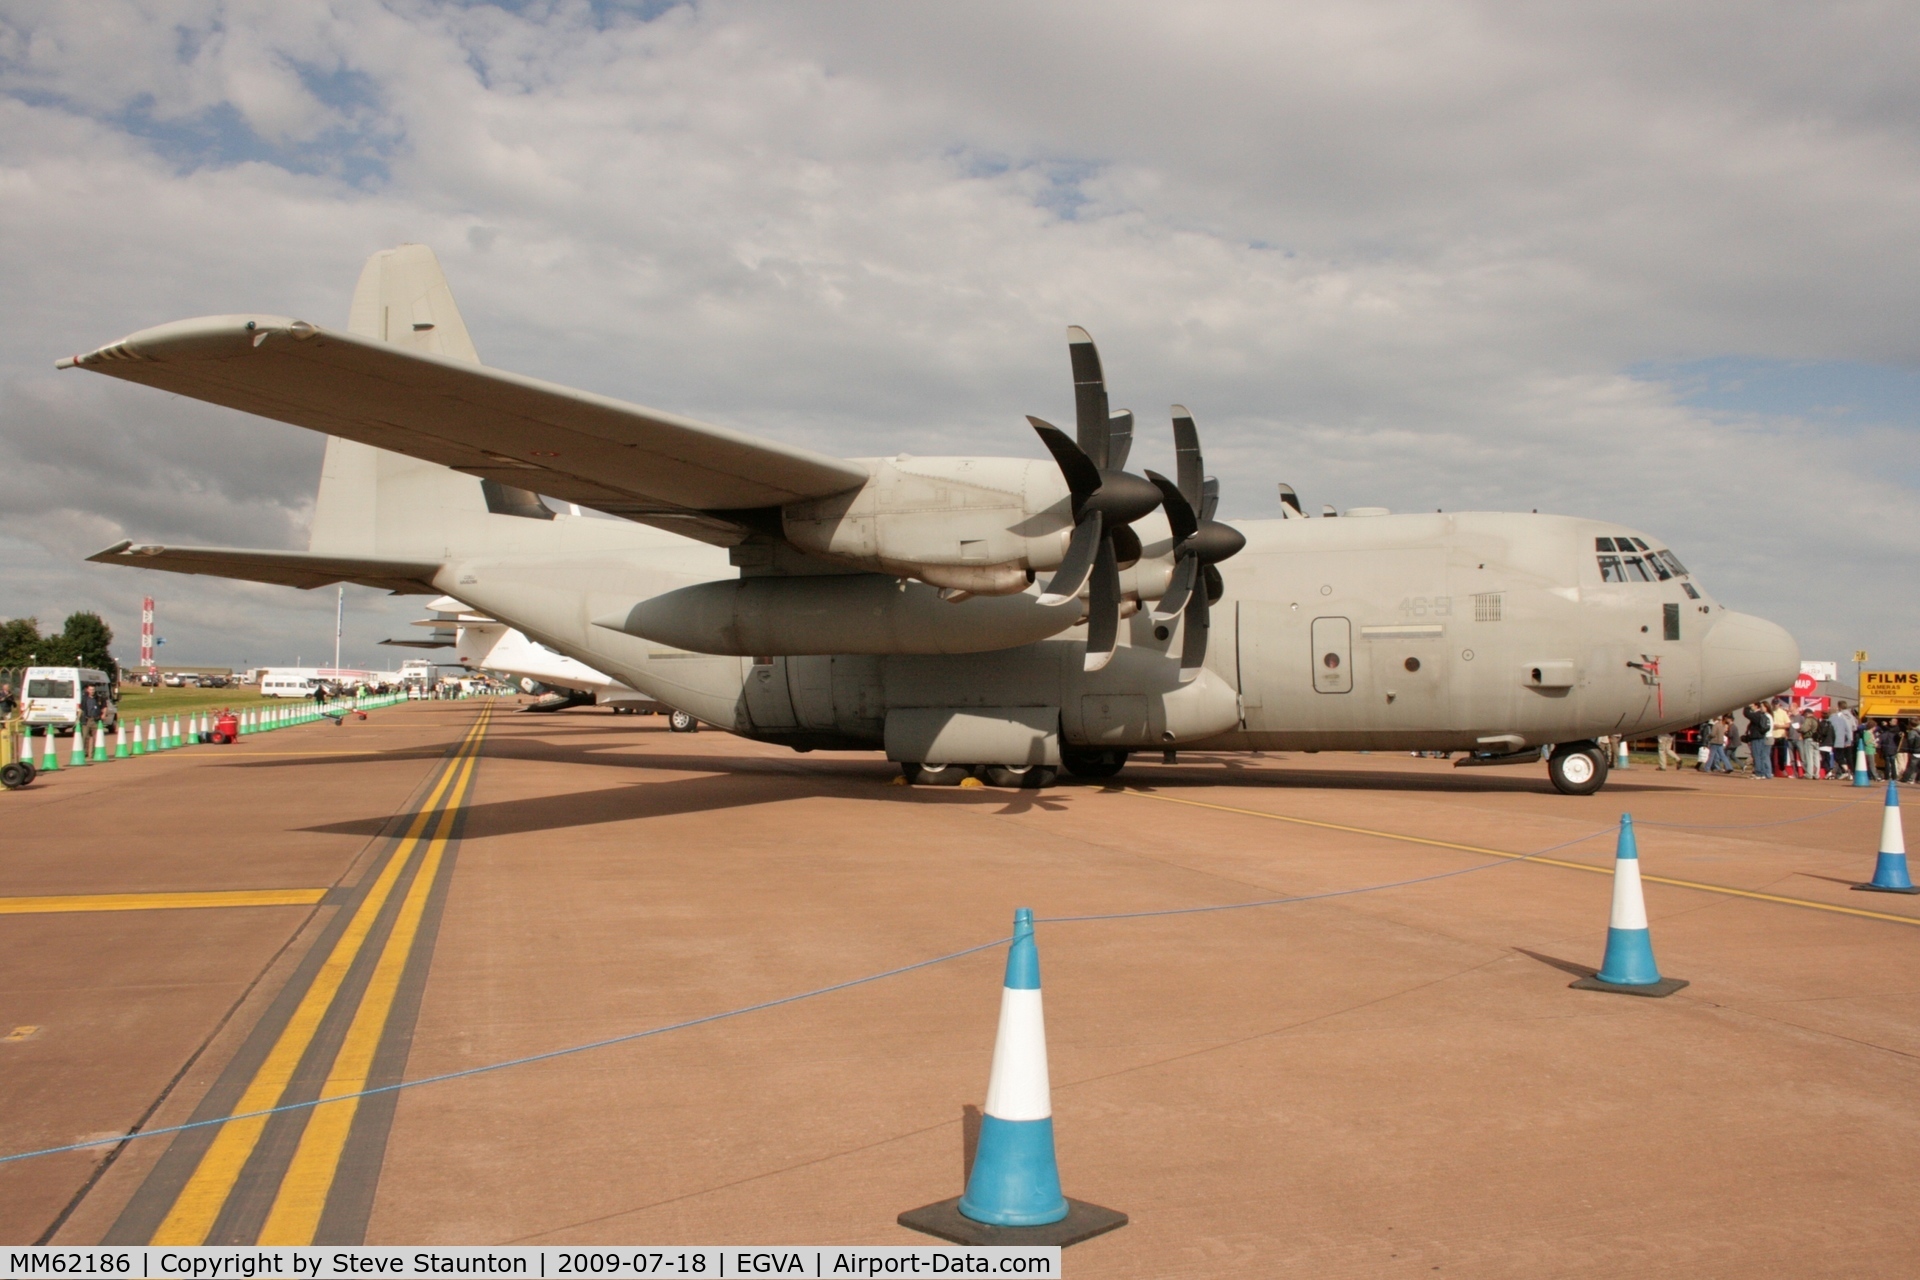 MM62186, Lockheed Martin C-130J-30 Super Hercules C/N 382-5520, Taken at the Royal International Air Tattoo 2009